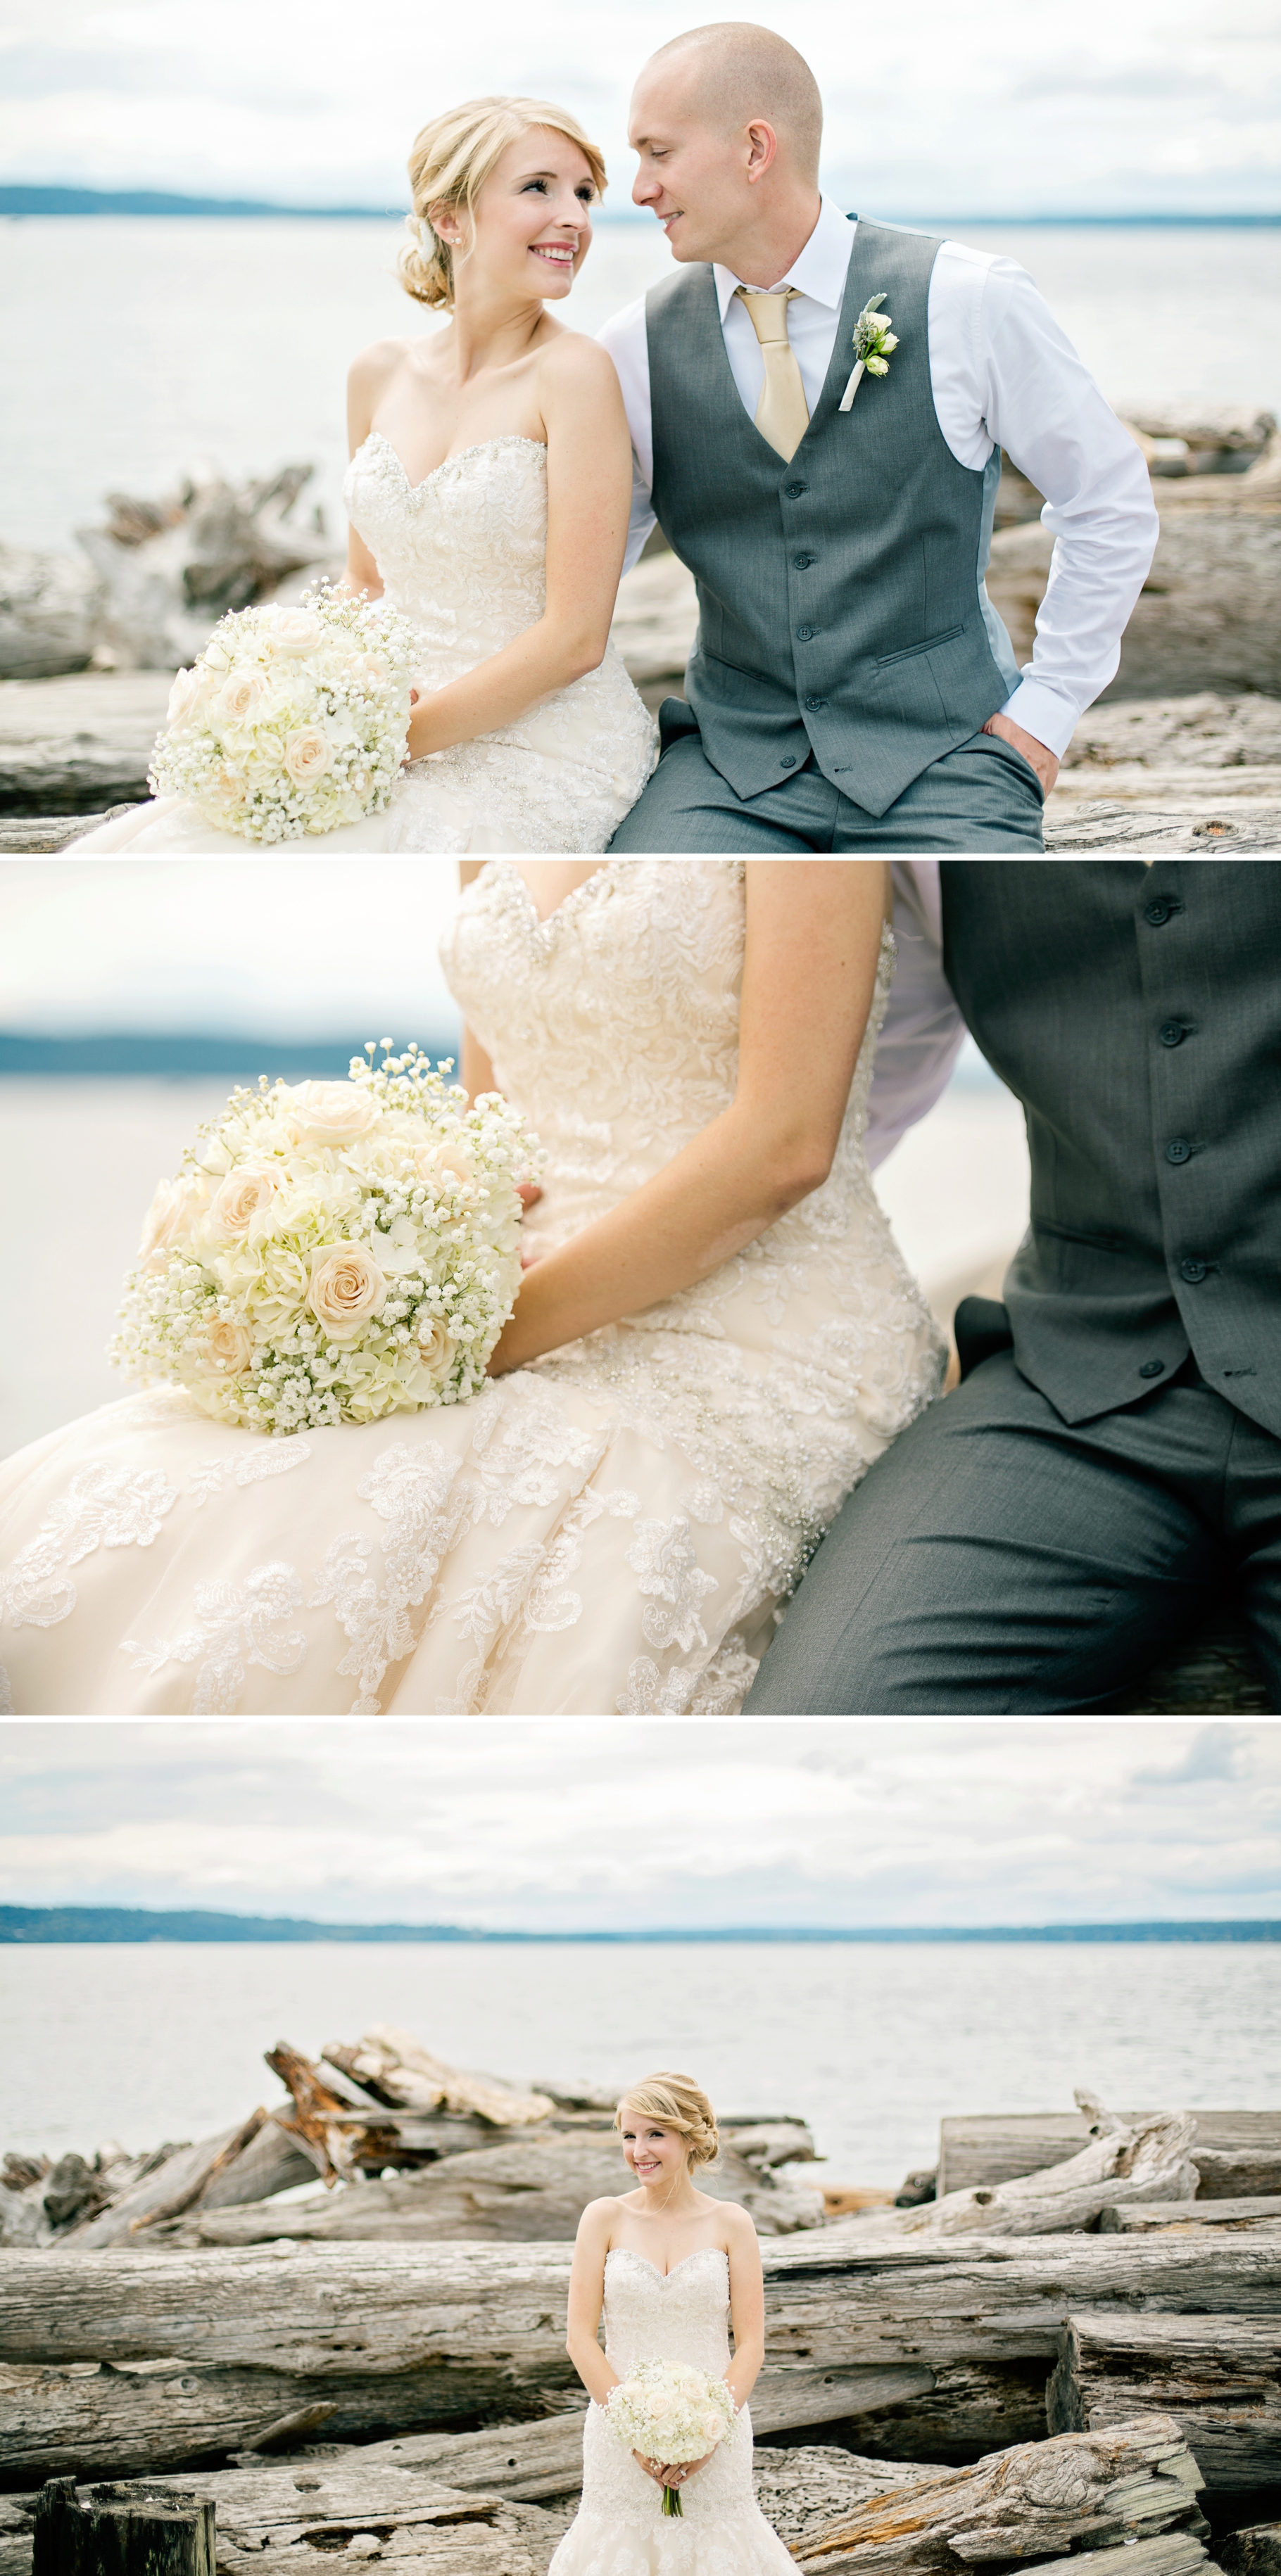 12-Bride-Groom-Portraits-Bridal-Bouquet-White-Hydrangeas-Waterfront-Pudget-Sound-Driftwood-Normandy-Cove-Beach-Wedding-Photographer-Bride-Groom-Seattle-Wedding-Photography-Northwest